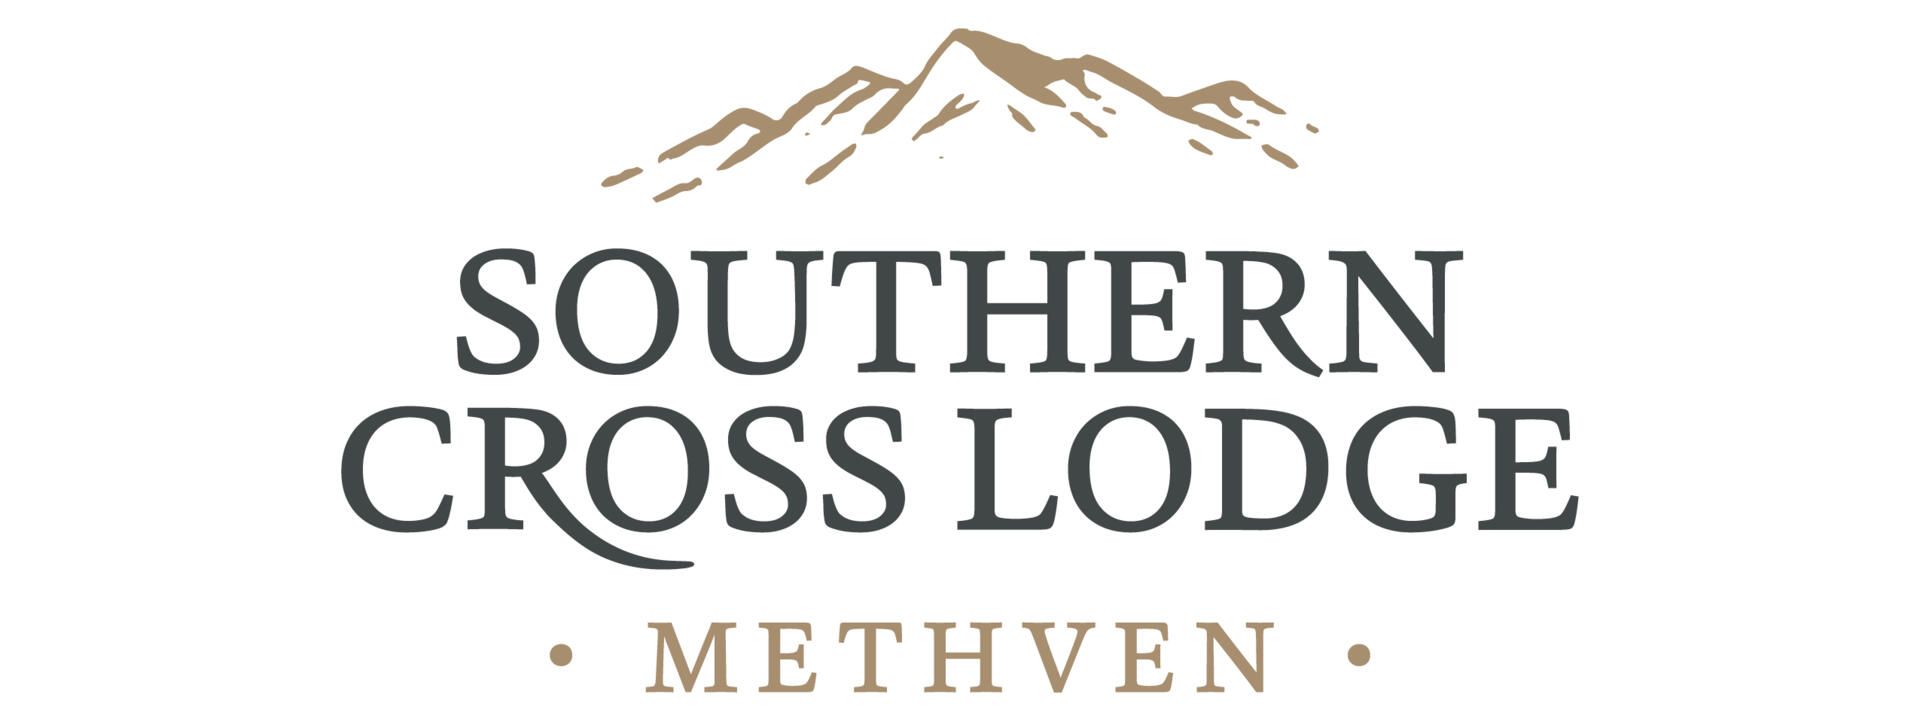 southern_cross_lodge_logo_stacked_white_bg_rgb.jpg